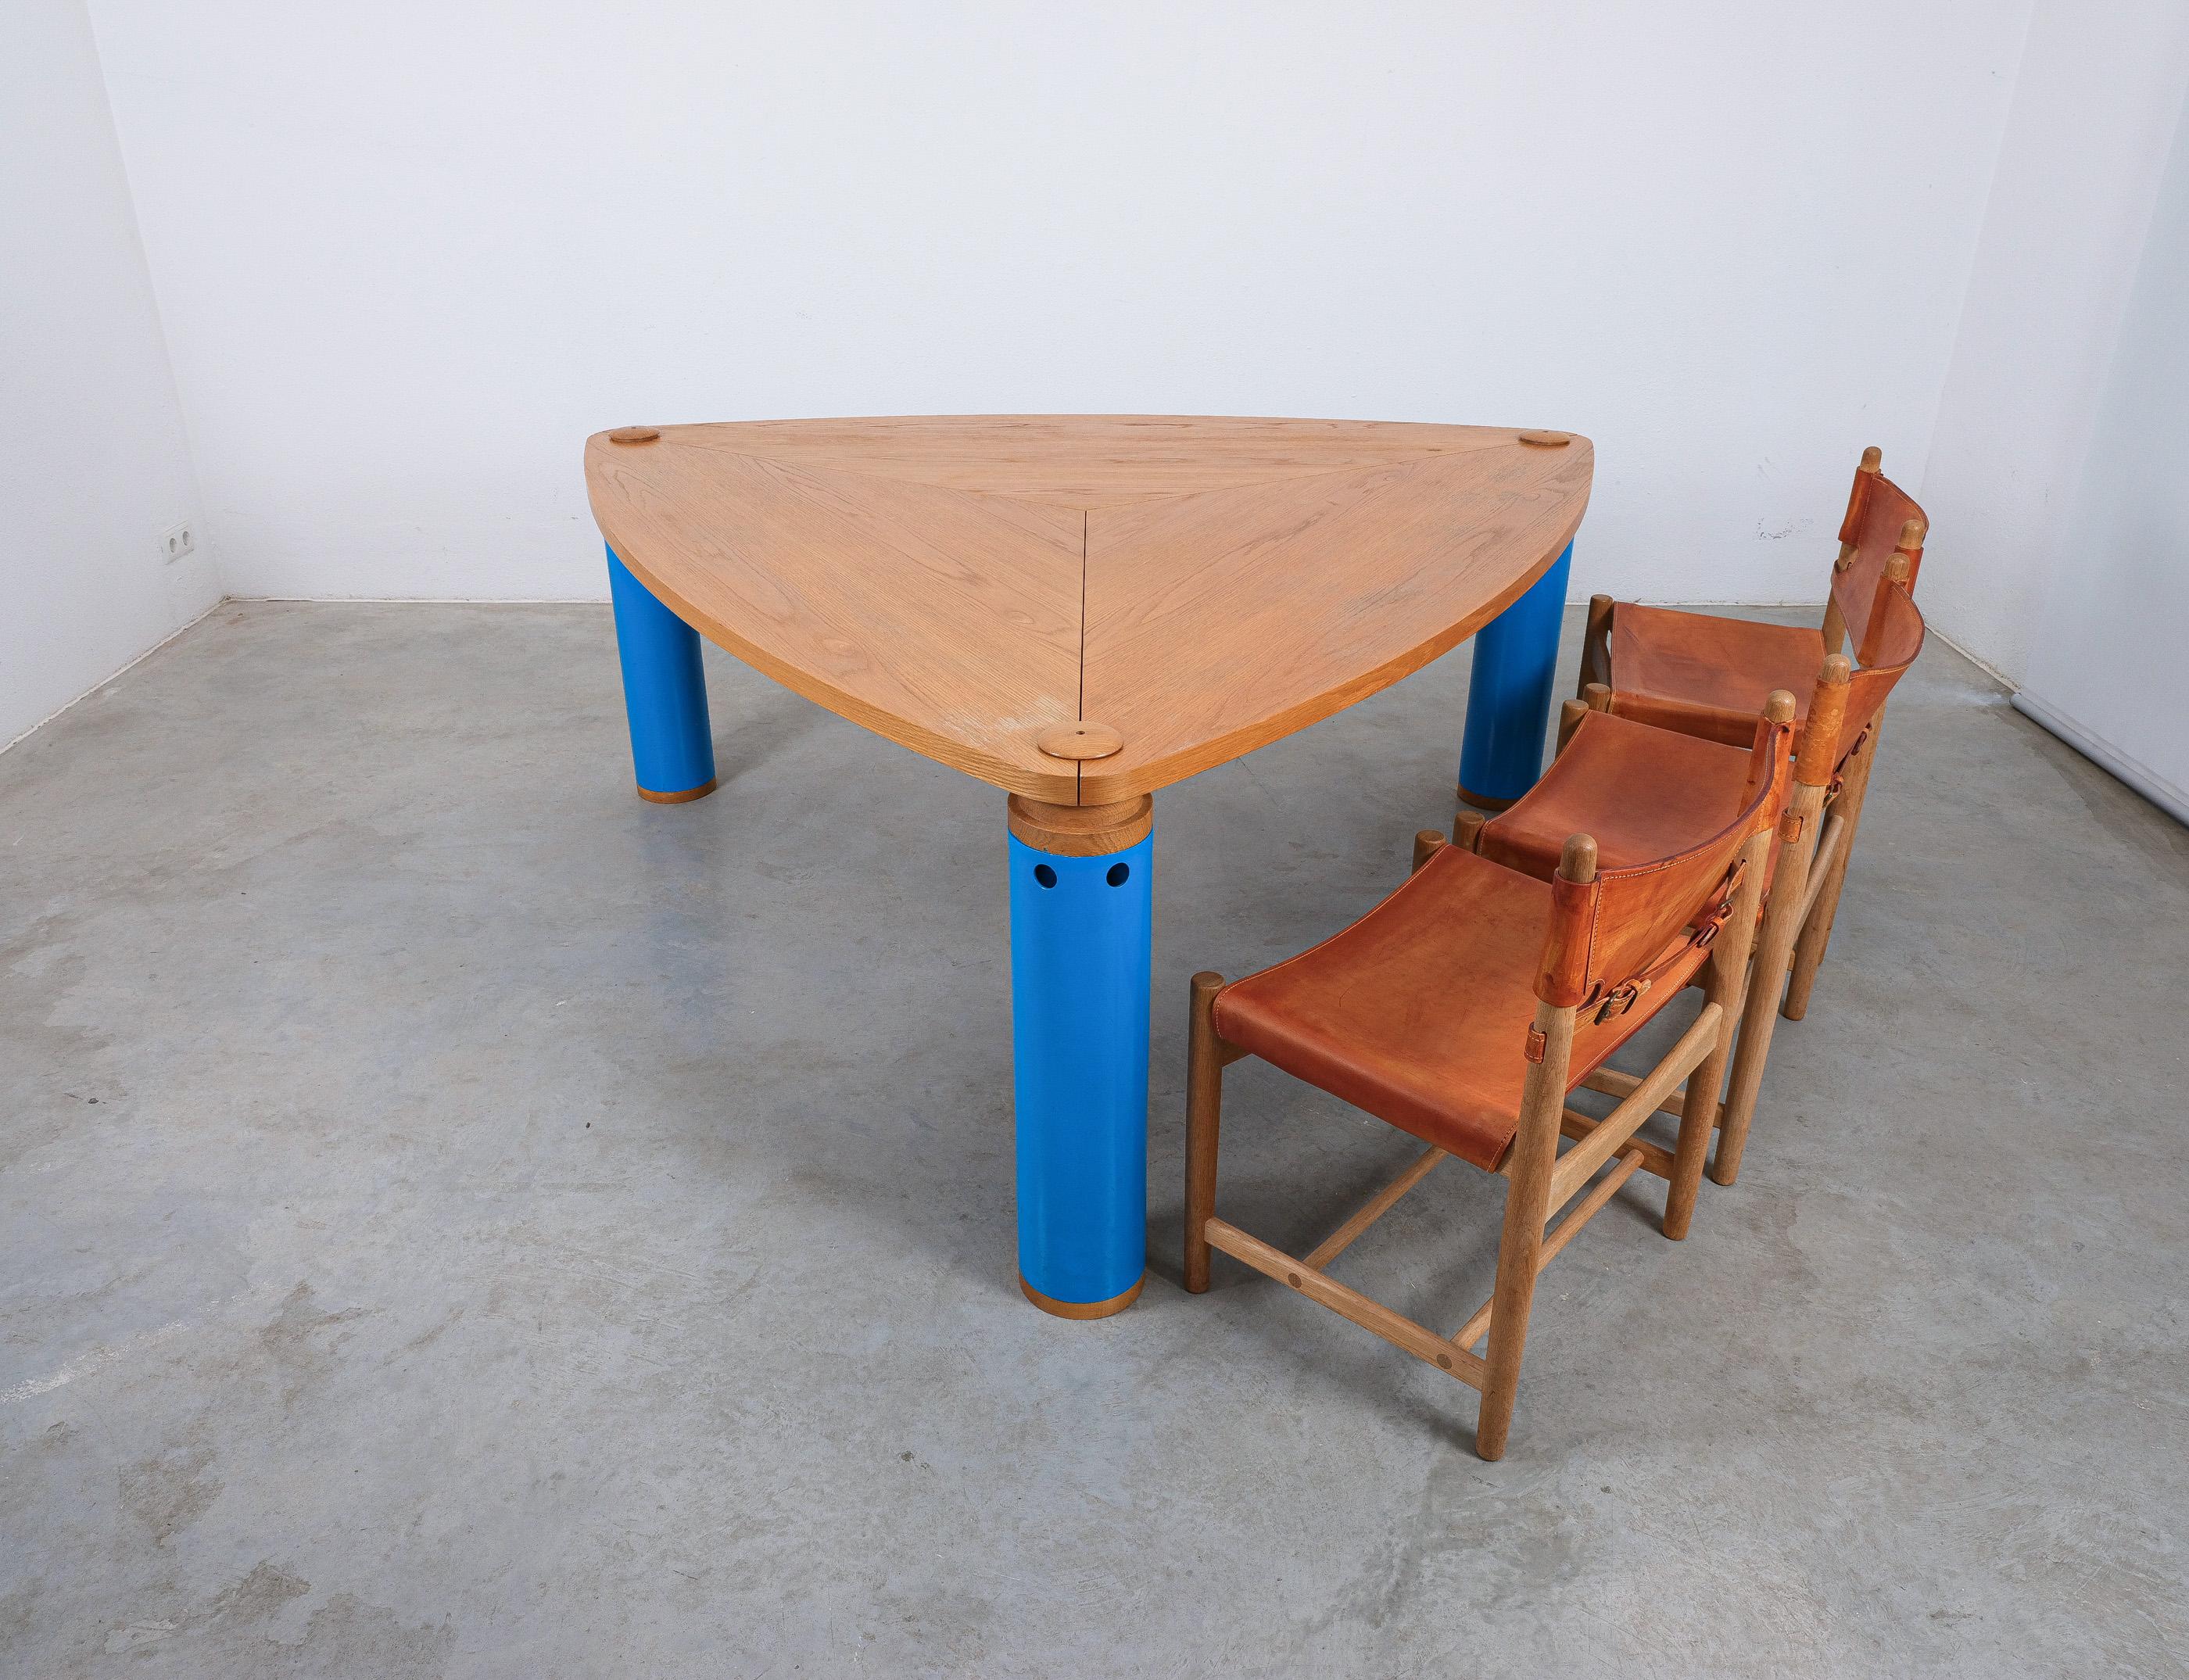 Unusual original dining table by Renato Mandurini designed and produced 1980 
Dimensions are 77.16